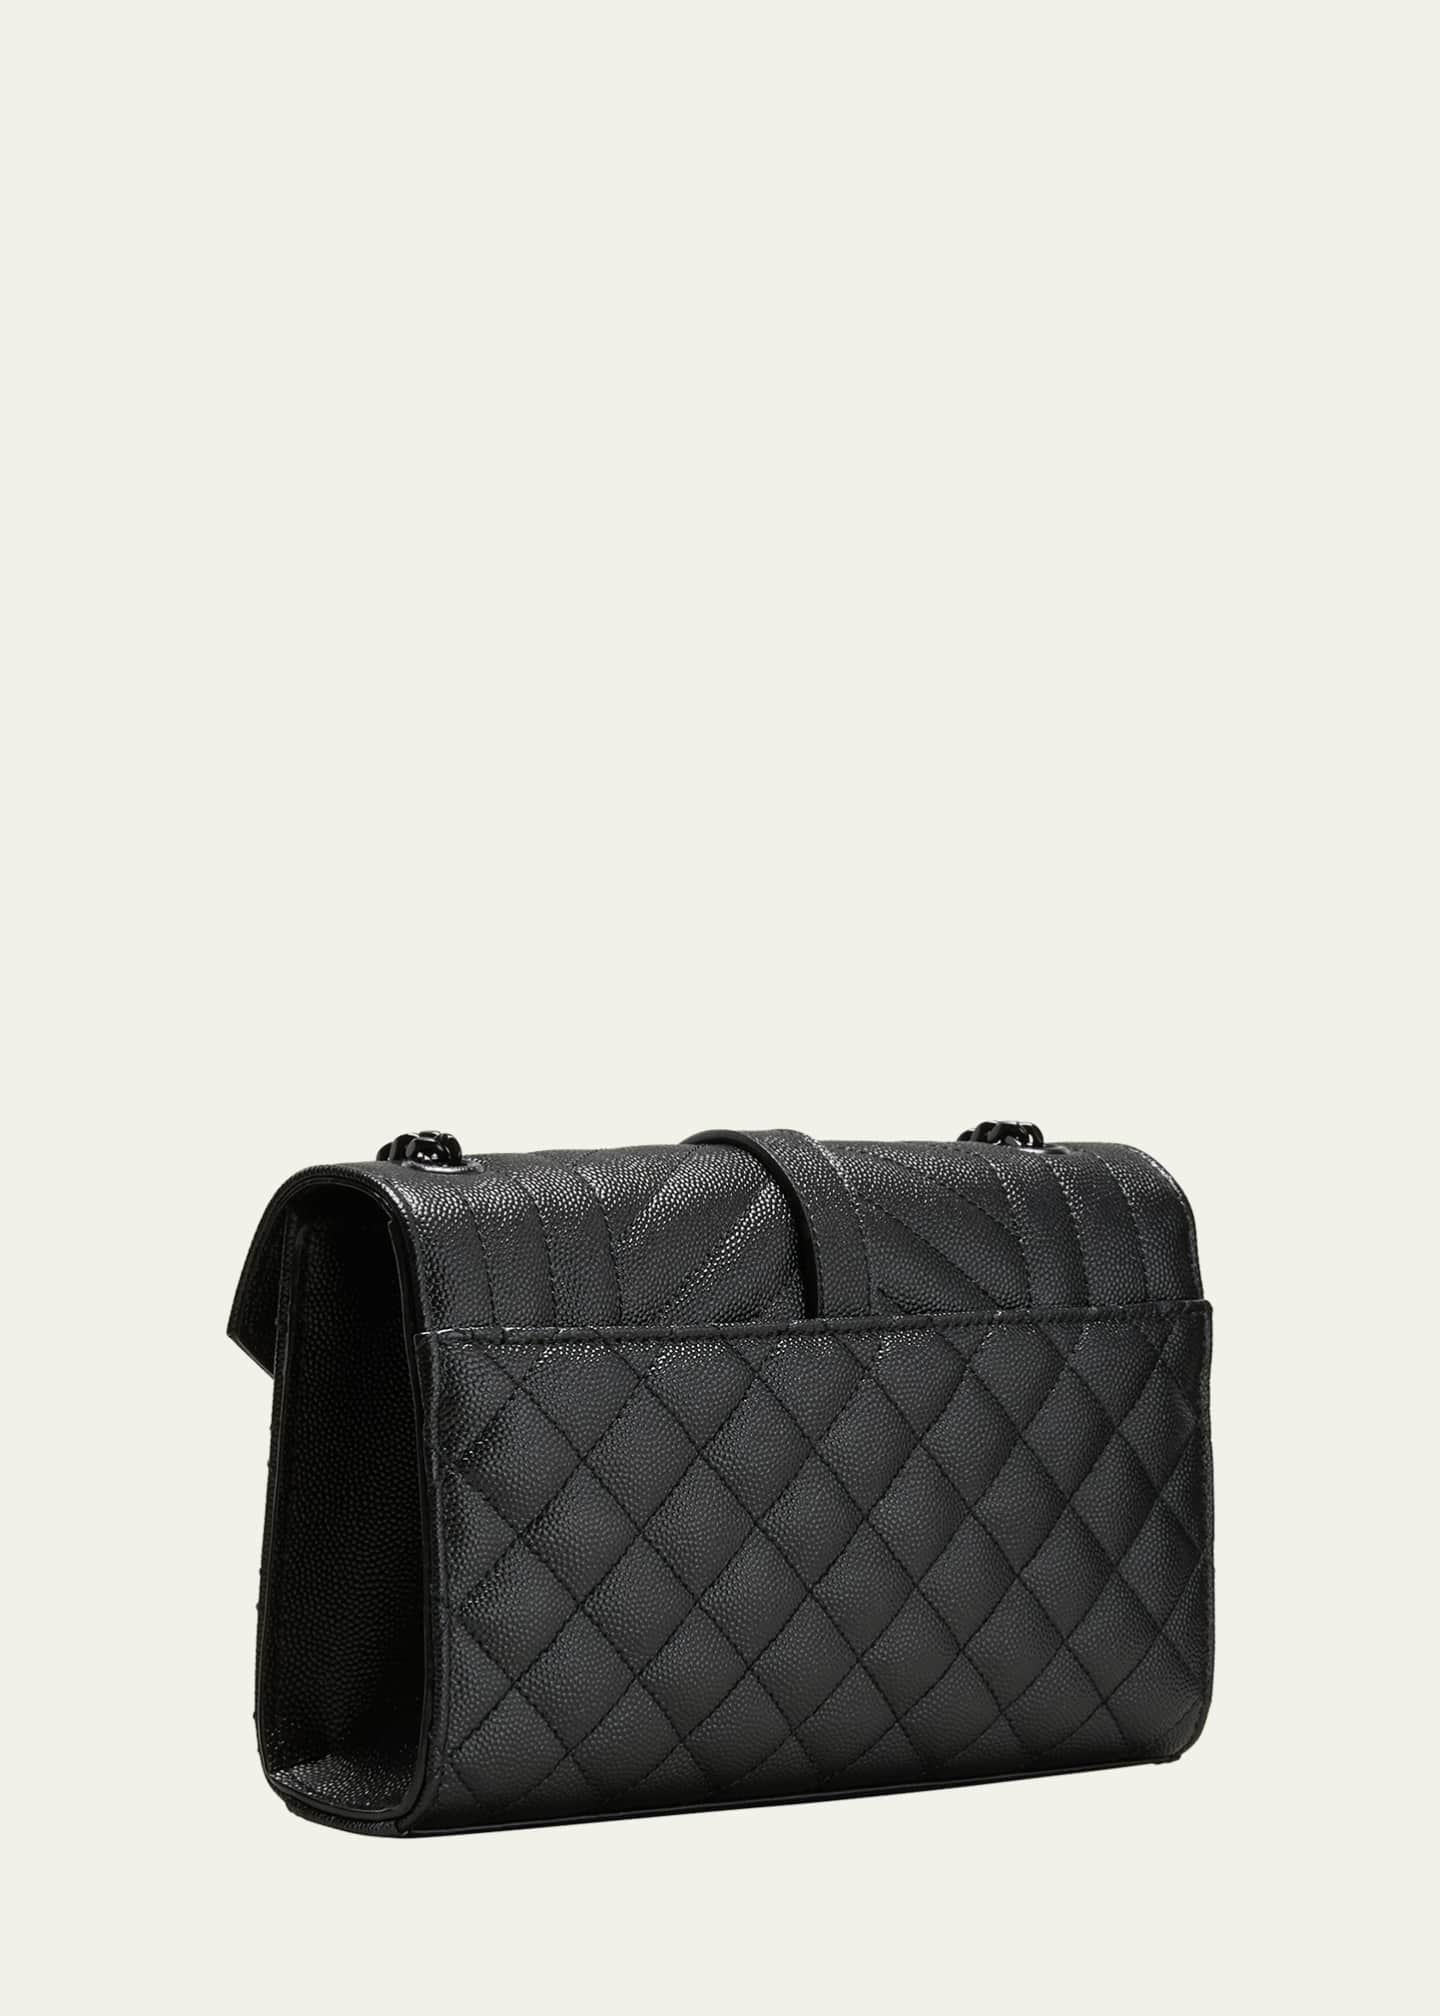 Saint Laurent Small Ysl Monogram Leather Satchel Bag Black